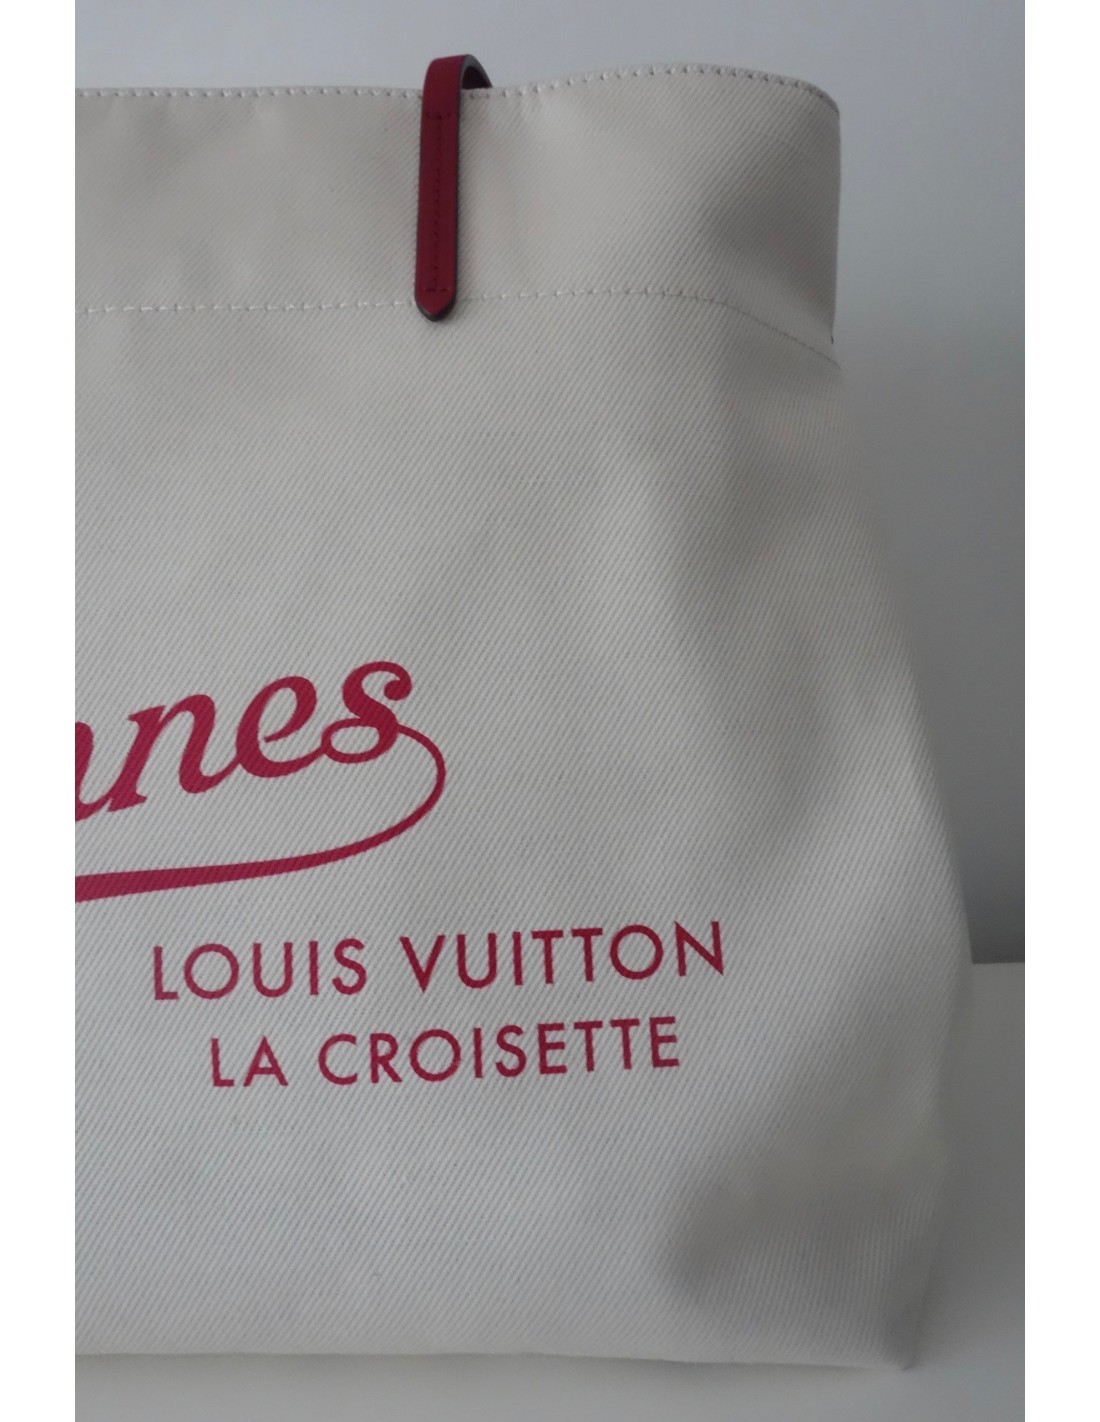 Cannes Paca Frankrike 2022 Louis Vuitton Logo Skylt Butik Gata